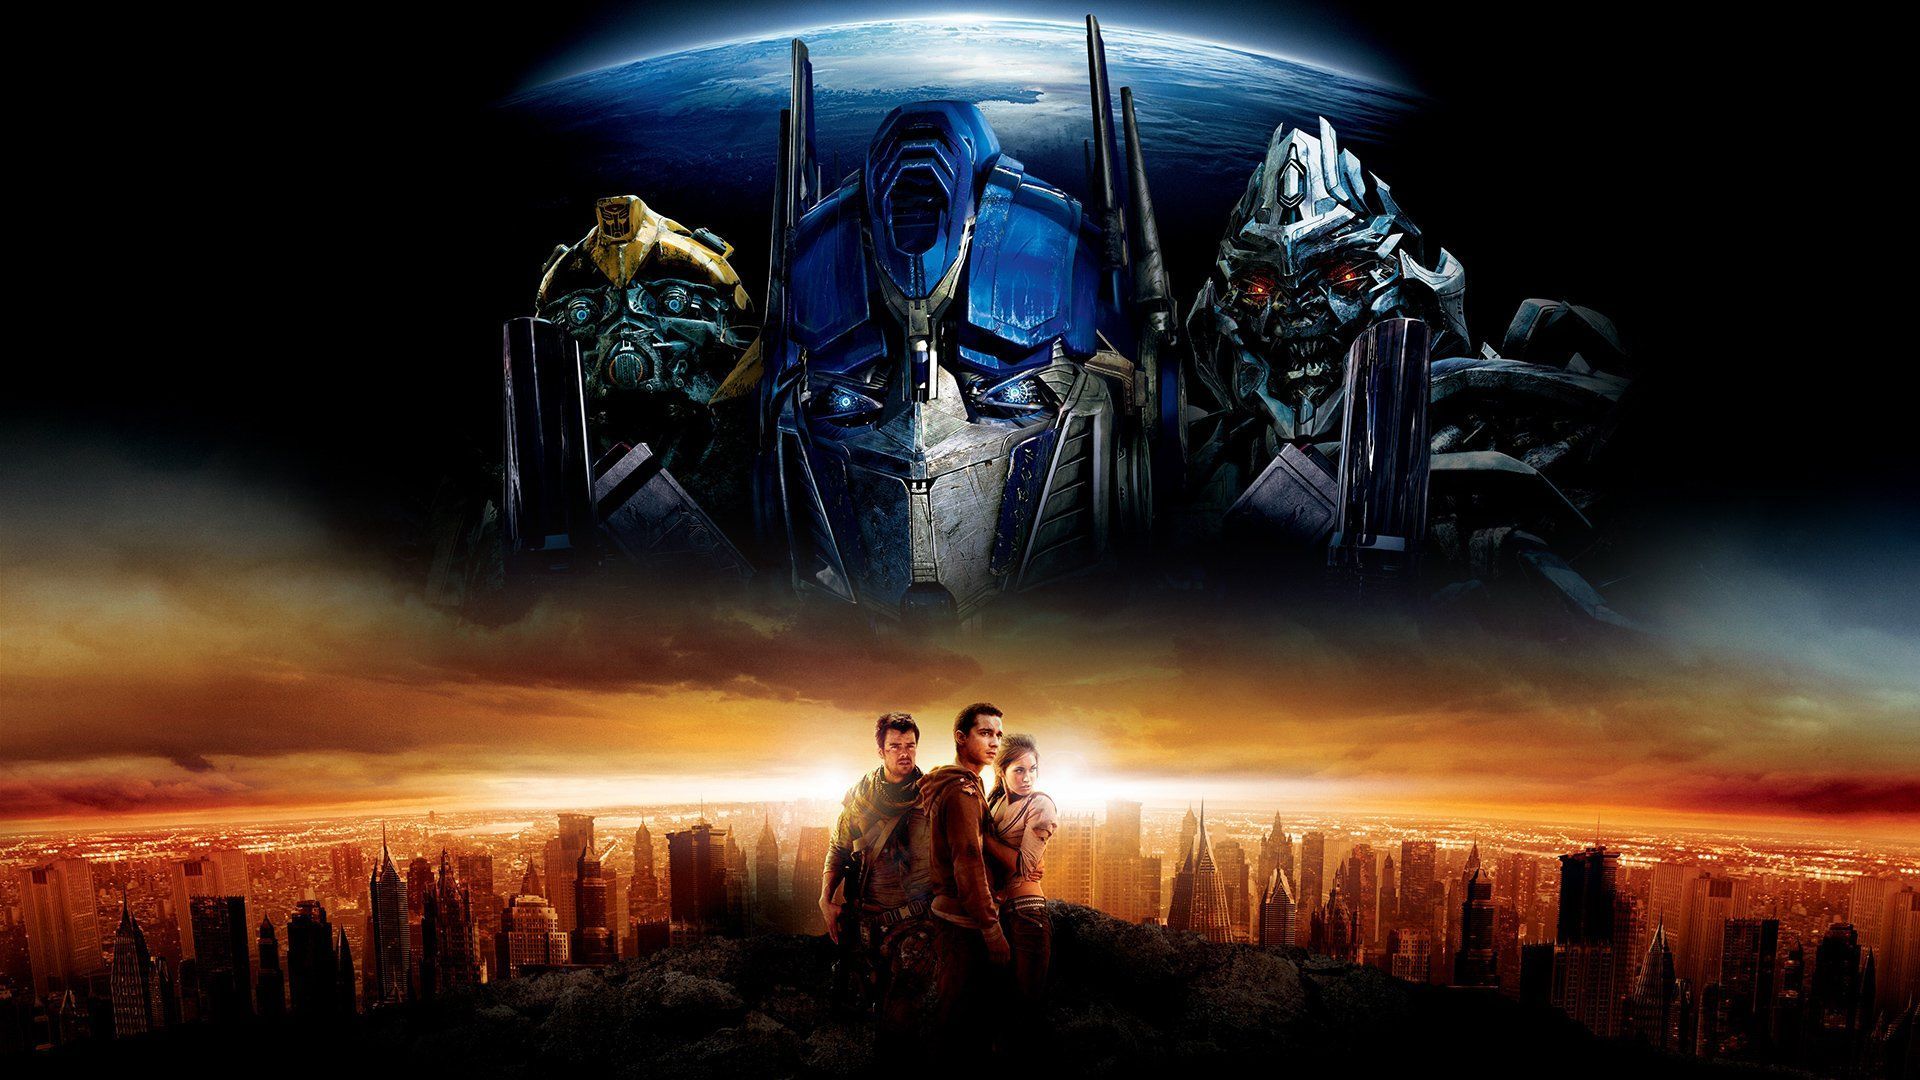 Movie Transformers Wallpaper. Transformers movie, Transformers